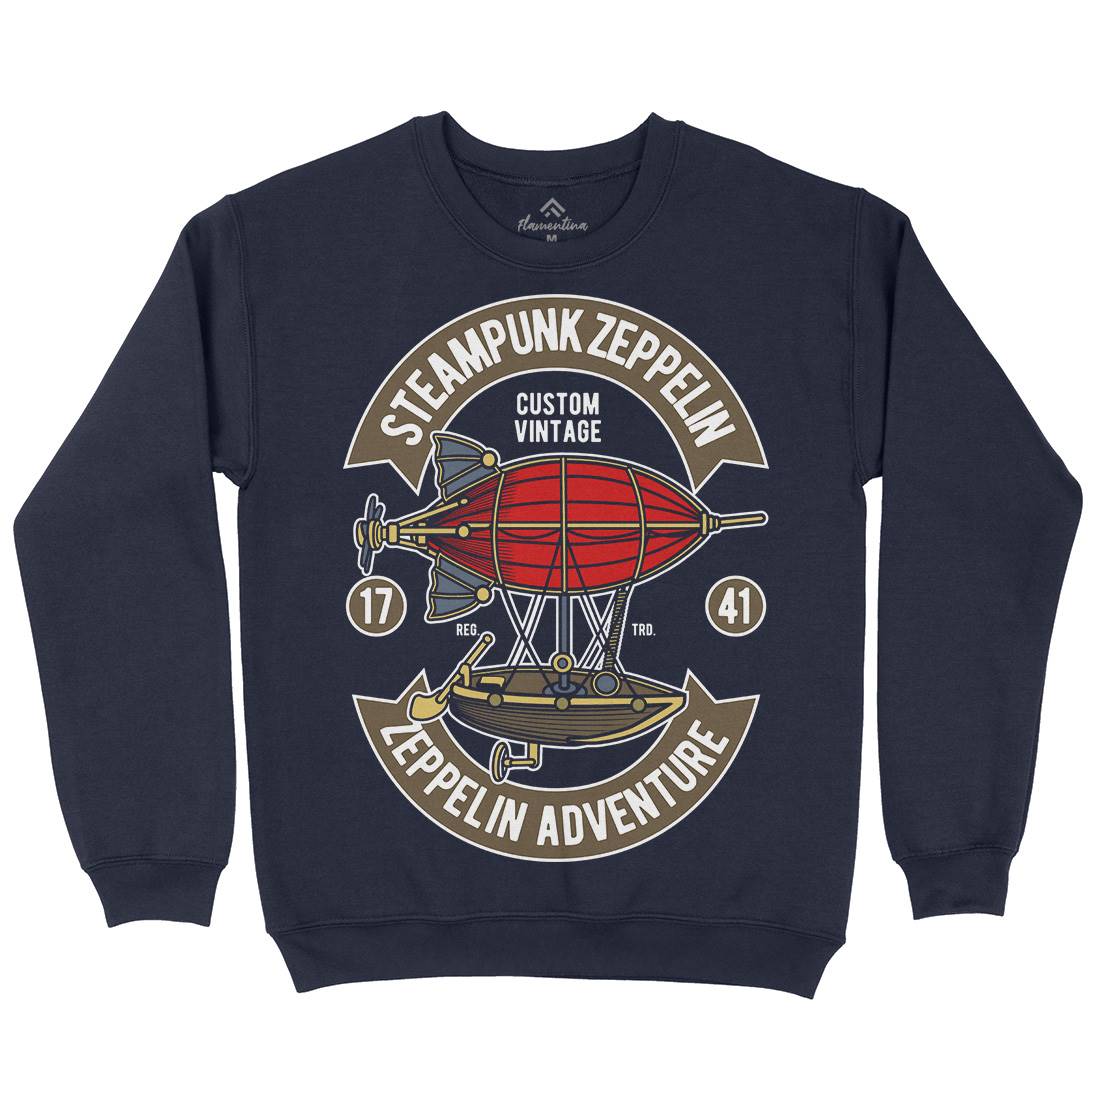 Steampunk Zeppelin Kids Crew Neck Sweatshirt Vehicles D584